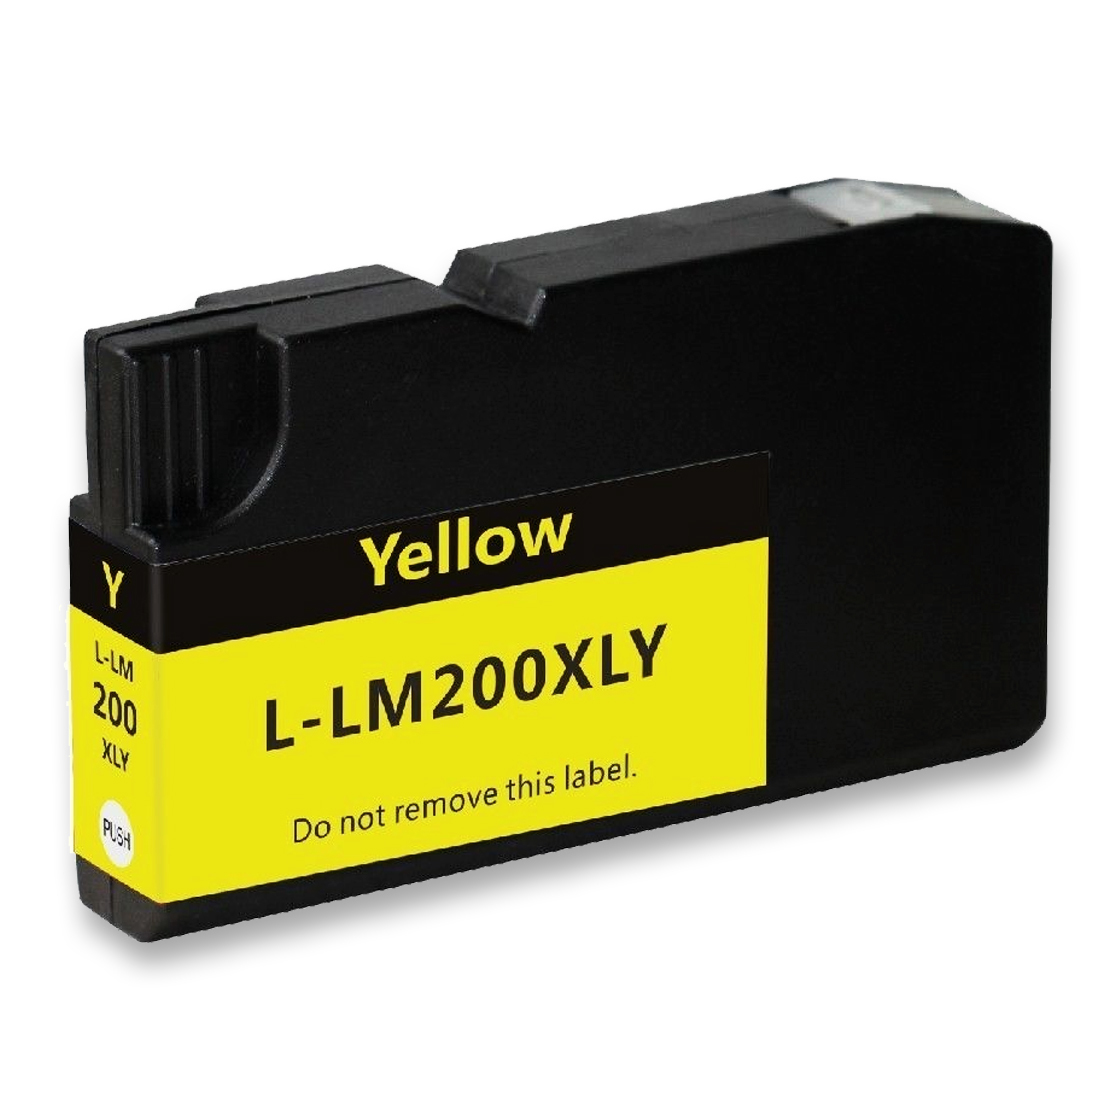 Køb Lexmark 200 XL Y  blækpatron - Kompatibel - Gul 35 ml - Pris 125.00 kr.